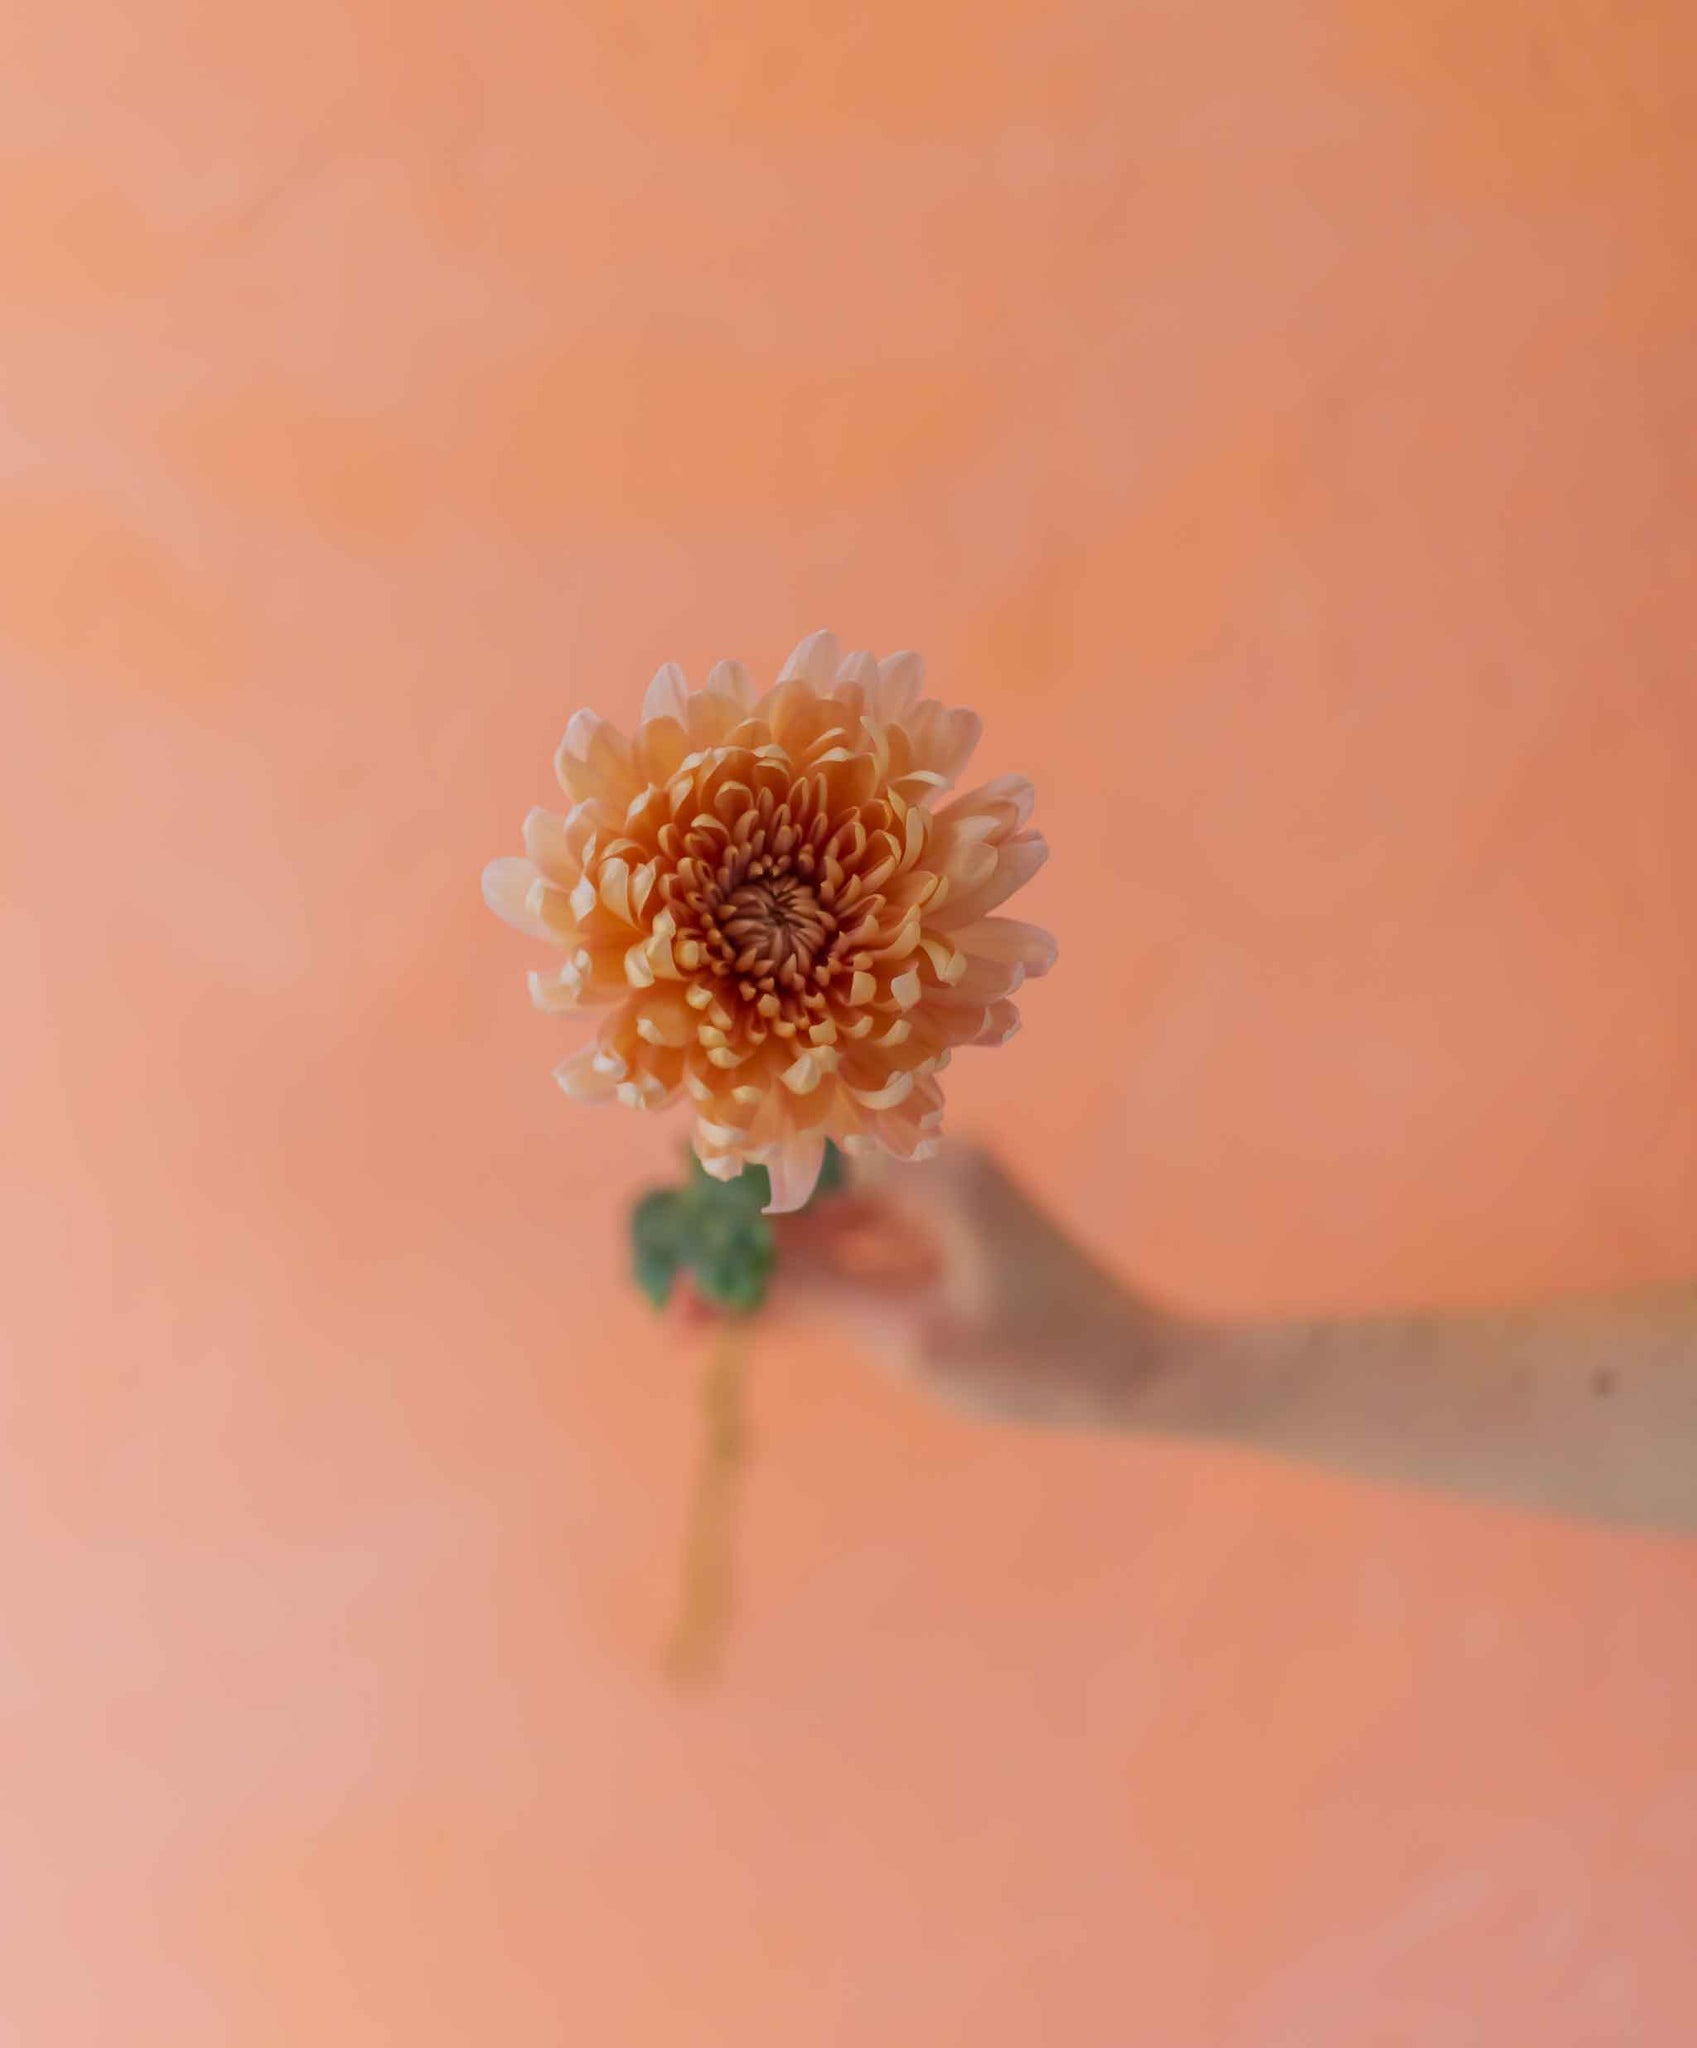 mum flower against a peach background